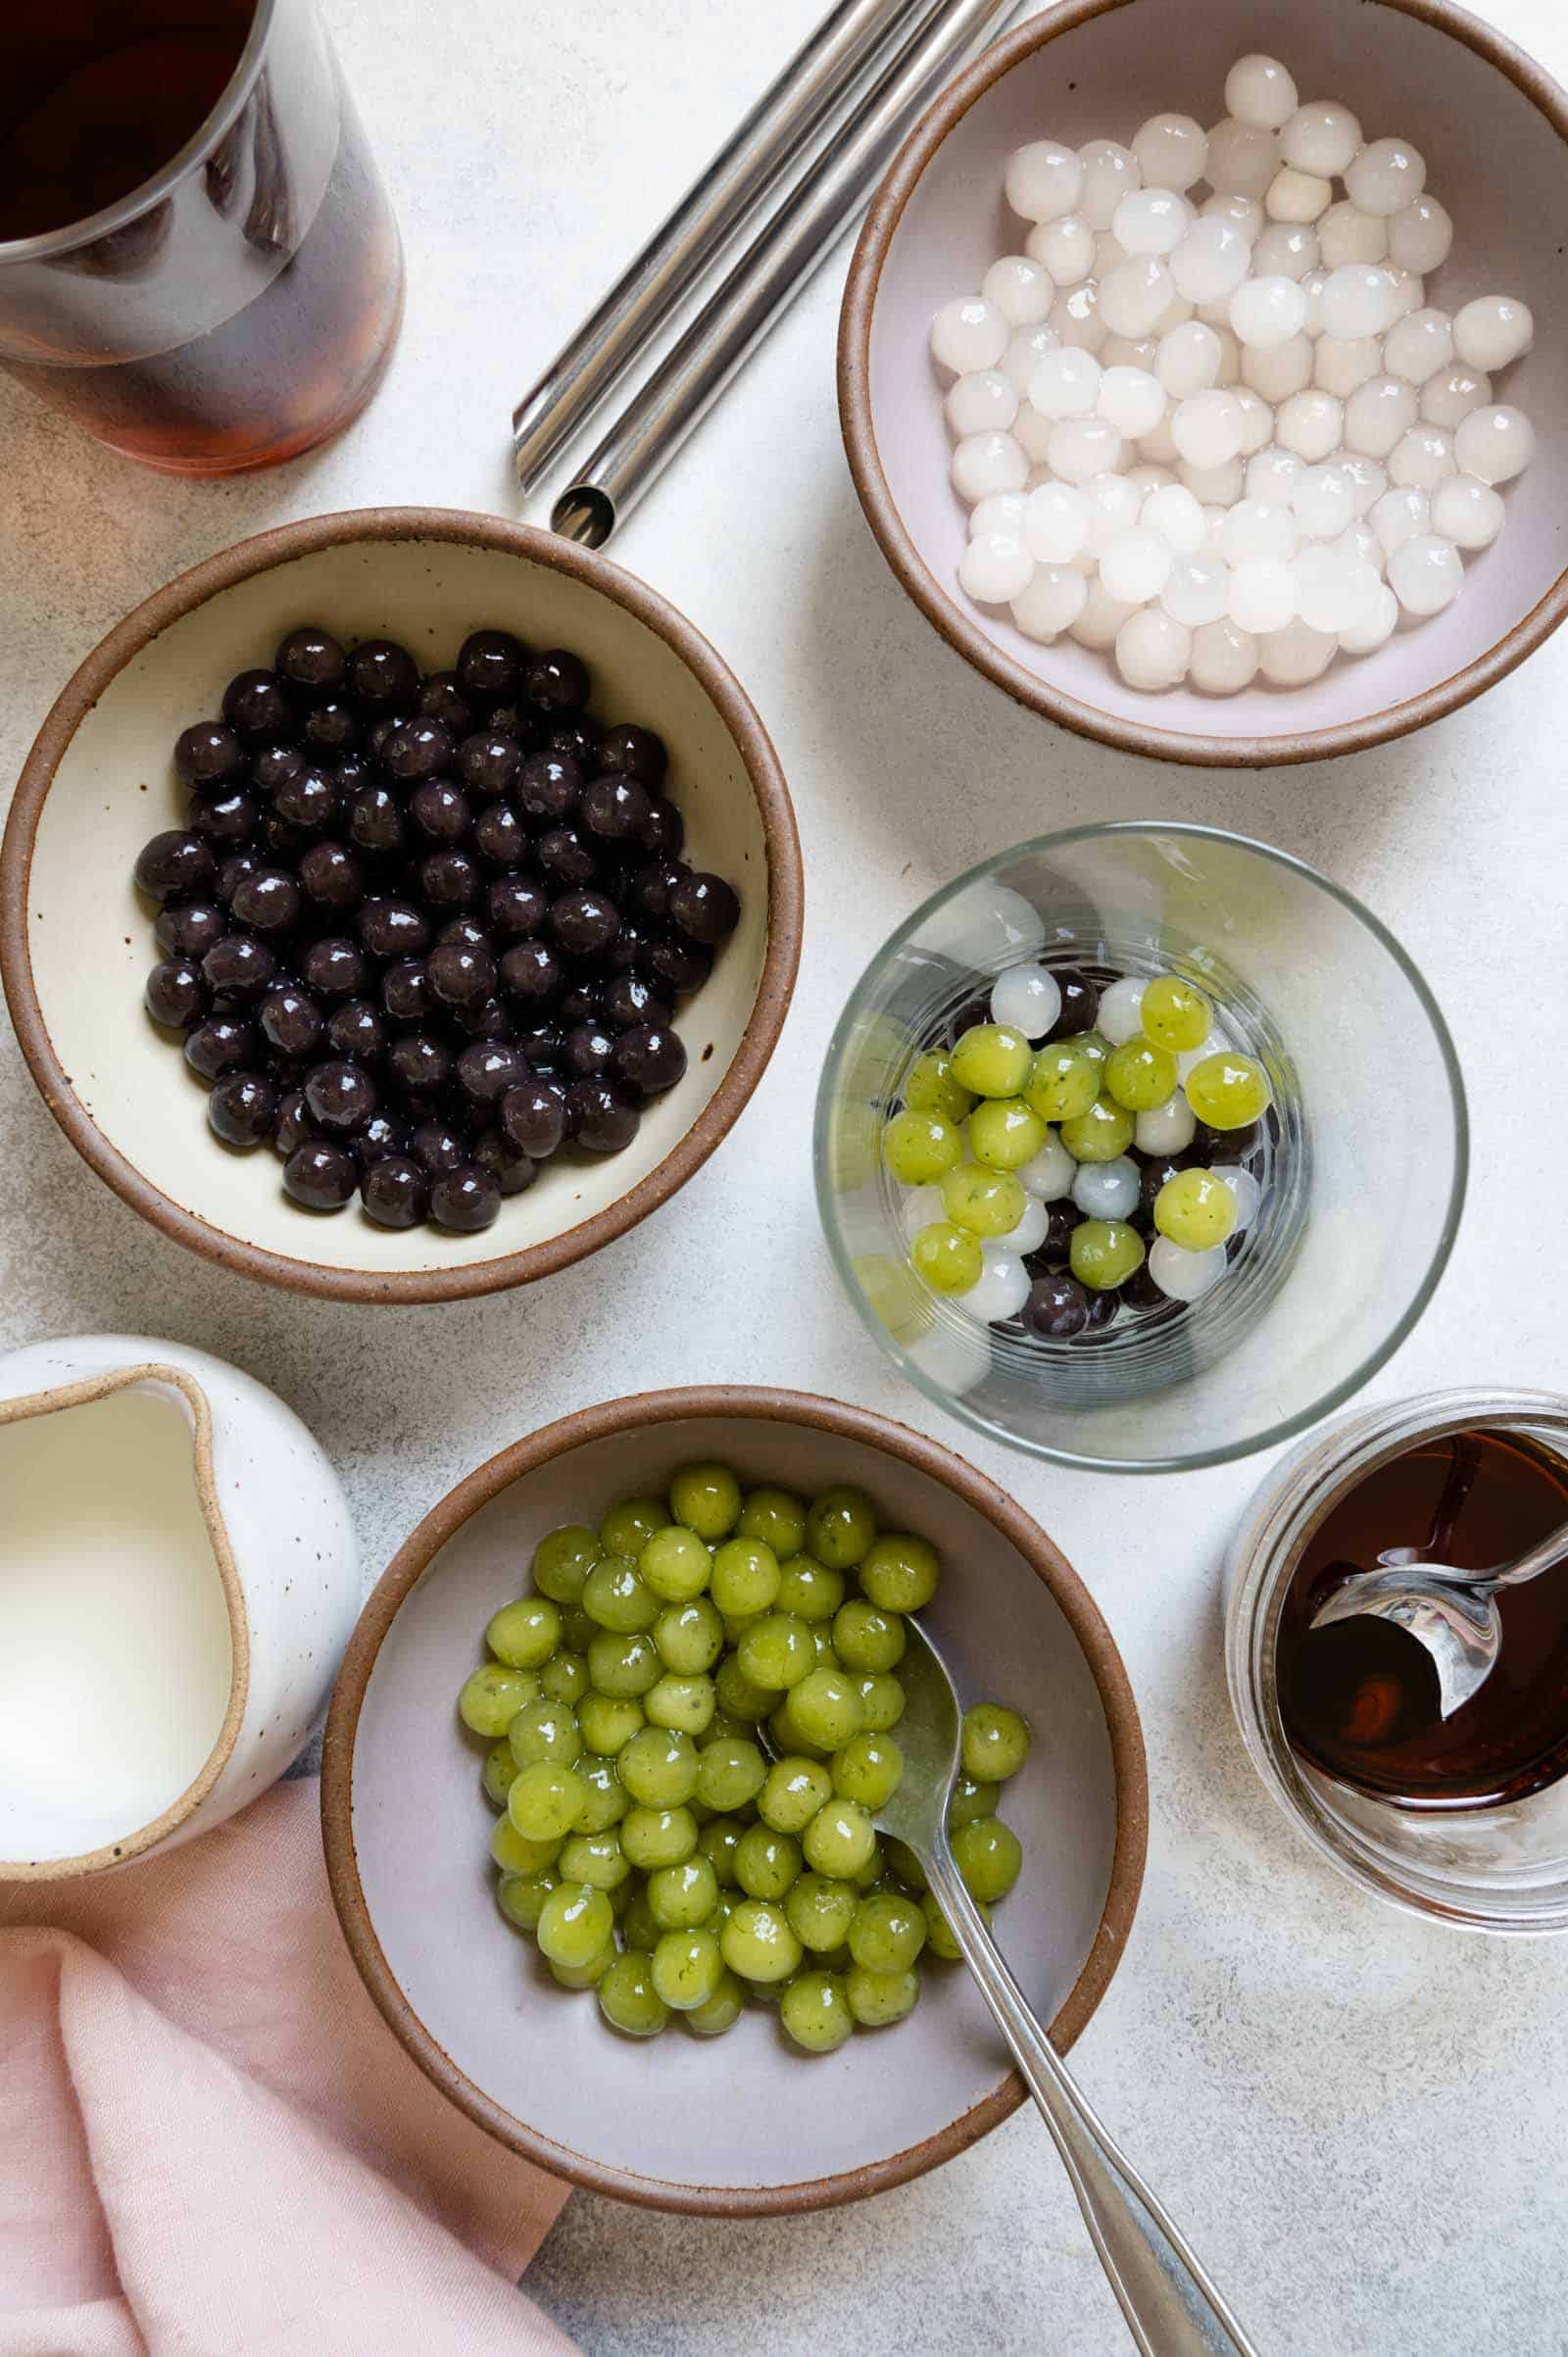 How to Make Tapioca Pearls (Boba, Boba Pearls)